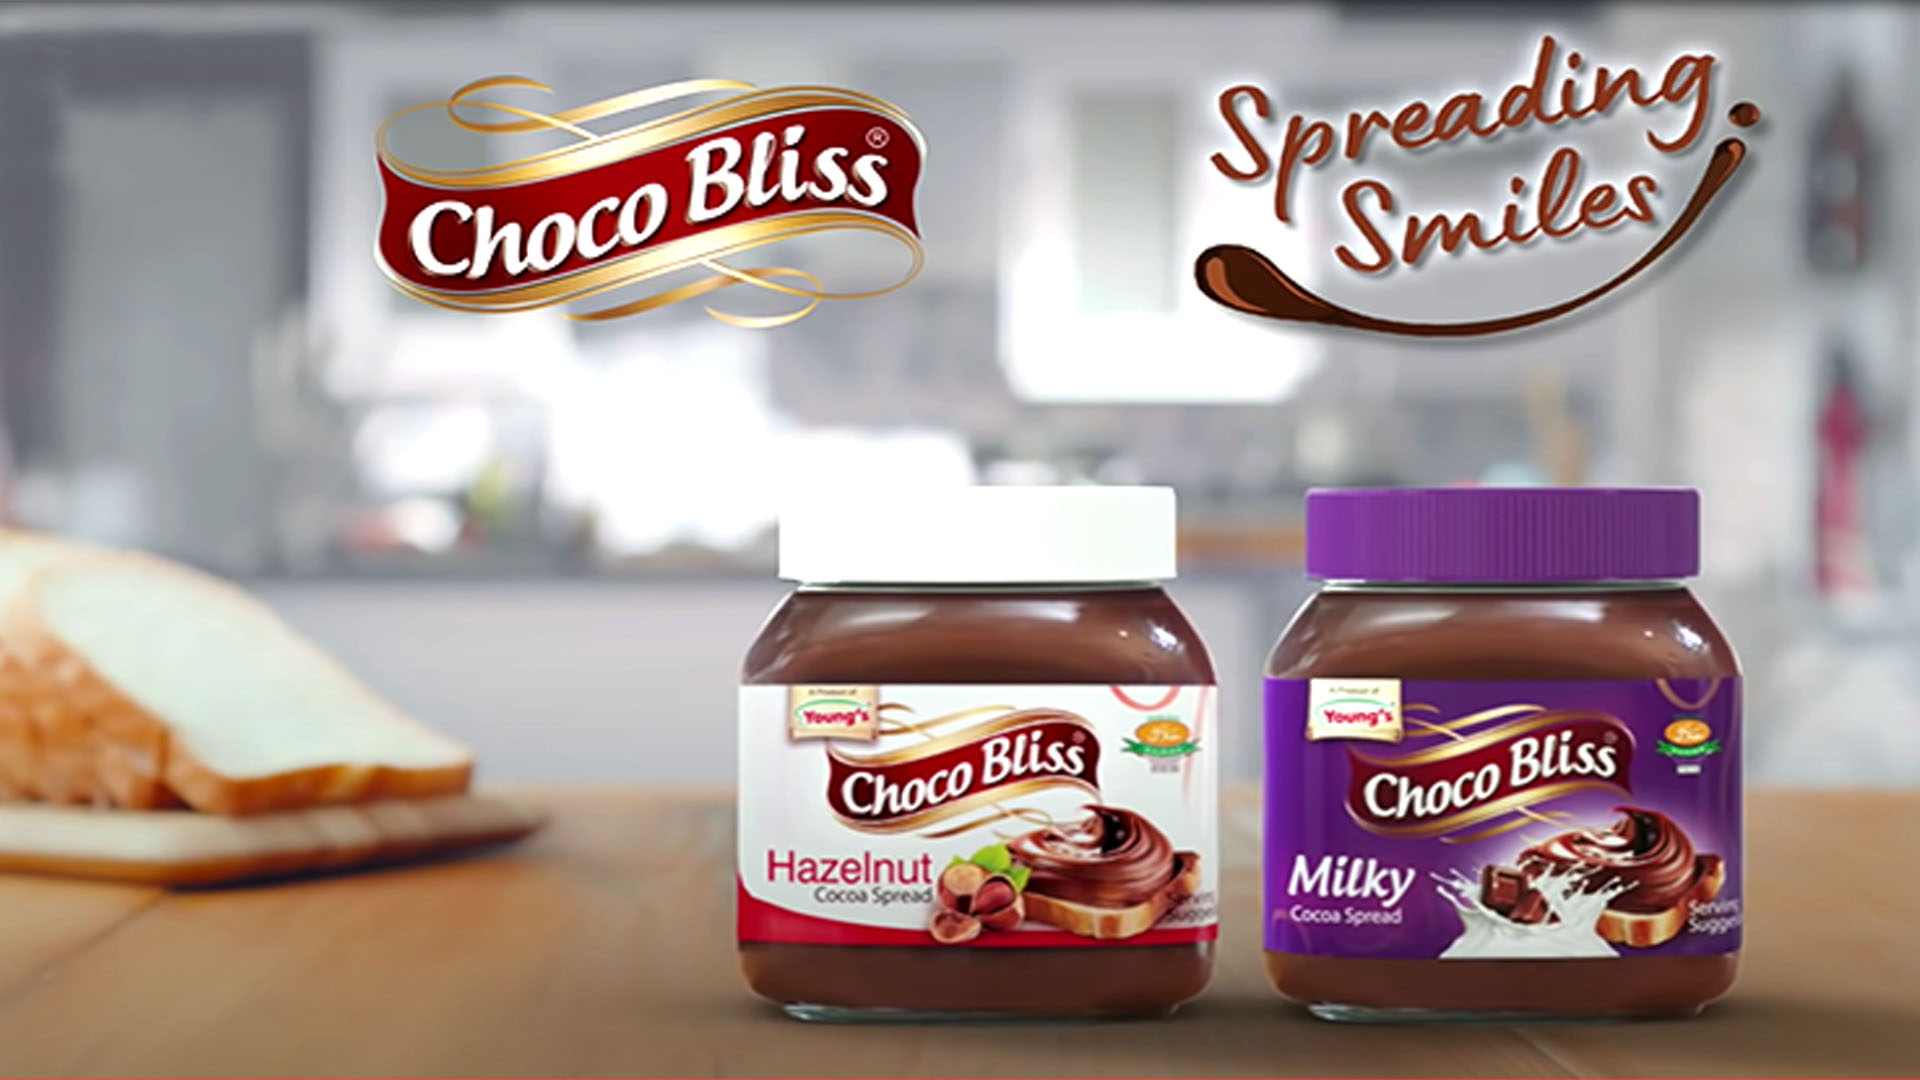 Choco Bliss | Spreading Smiles